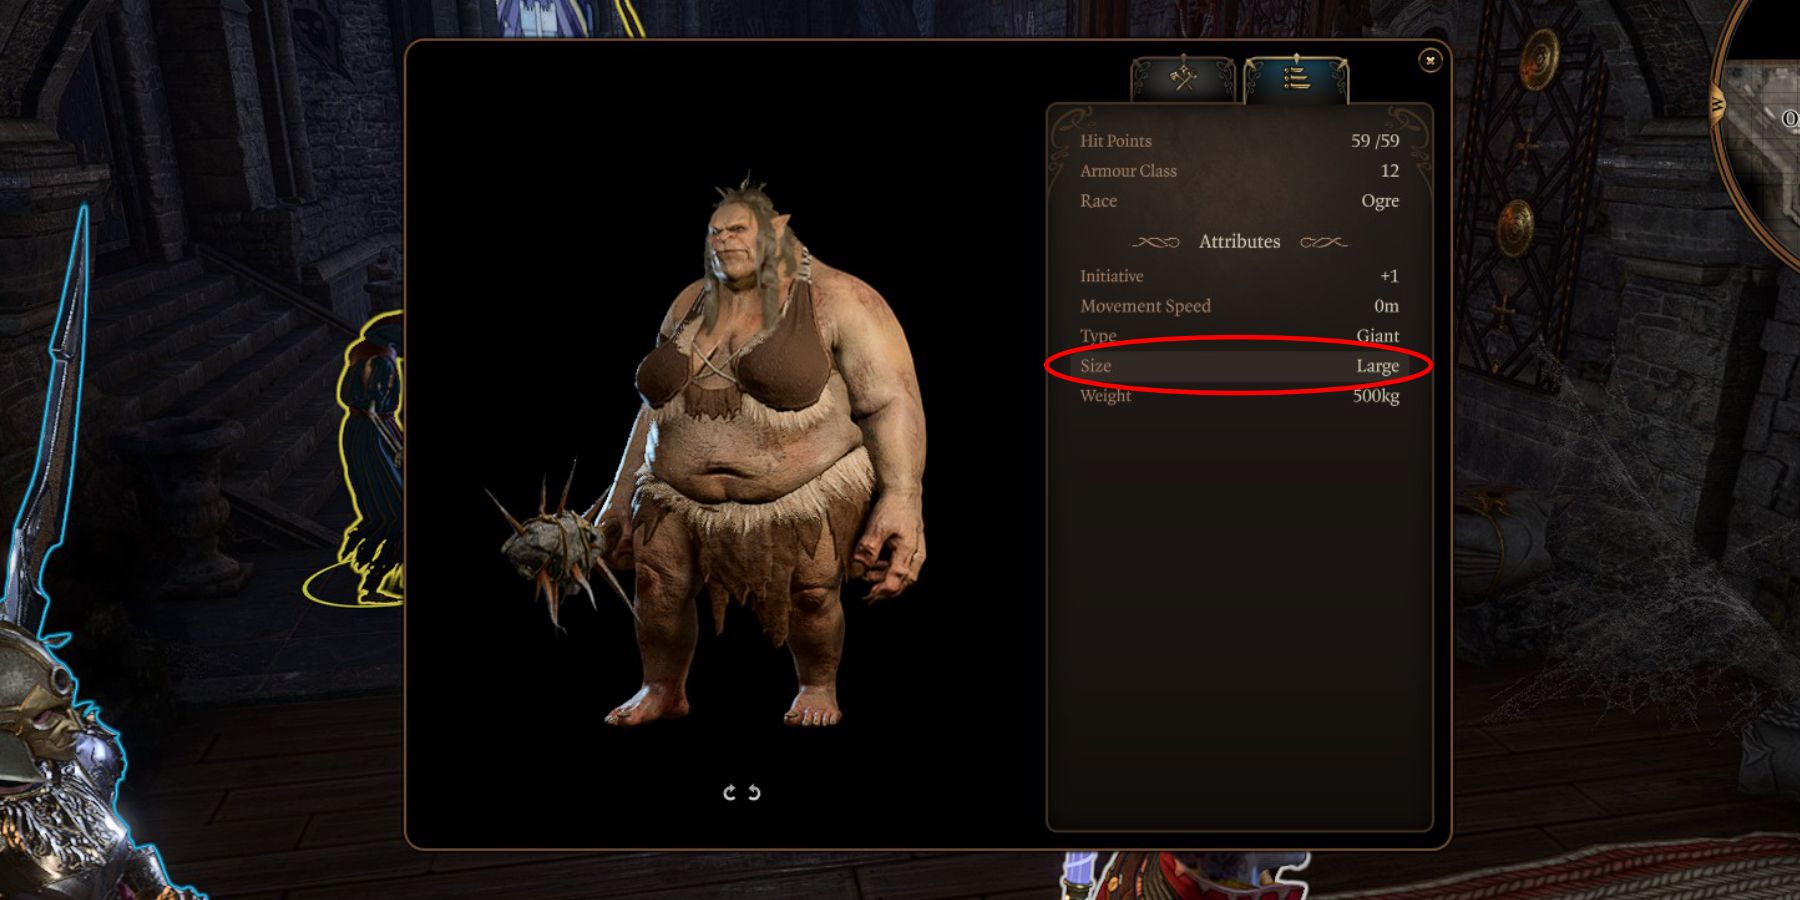 Baldurs Gate 3 Check Examine Creature Size Ogre